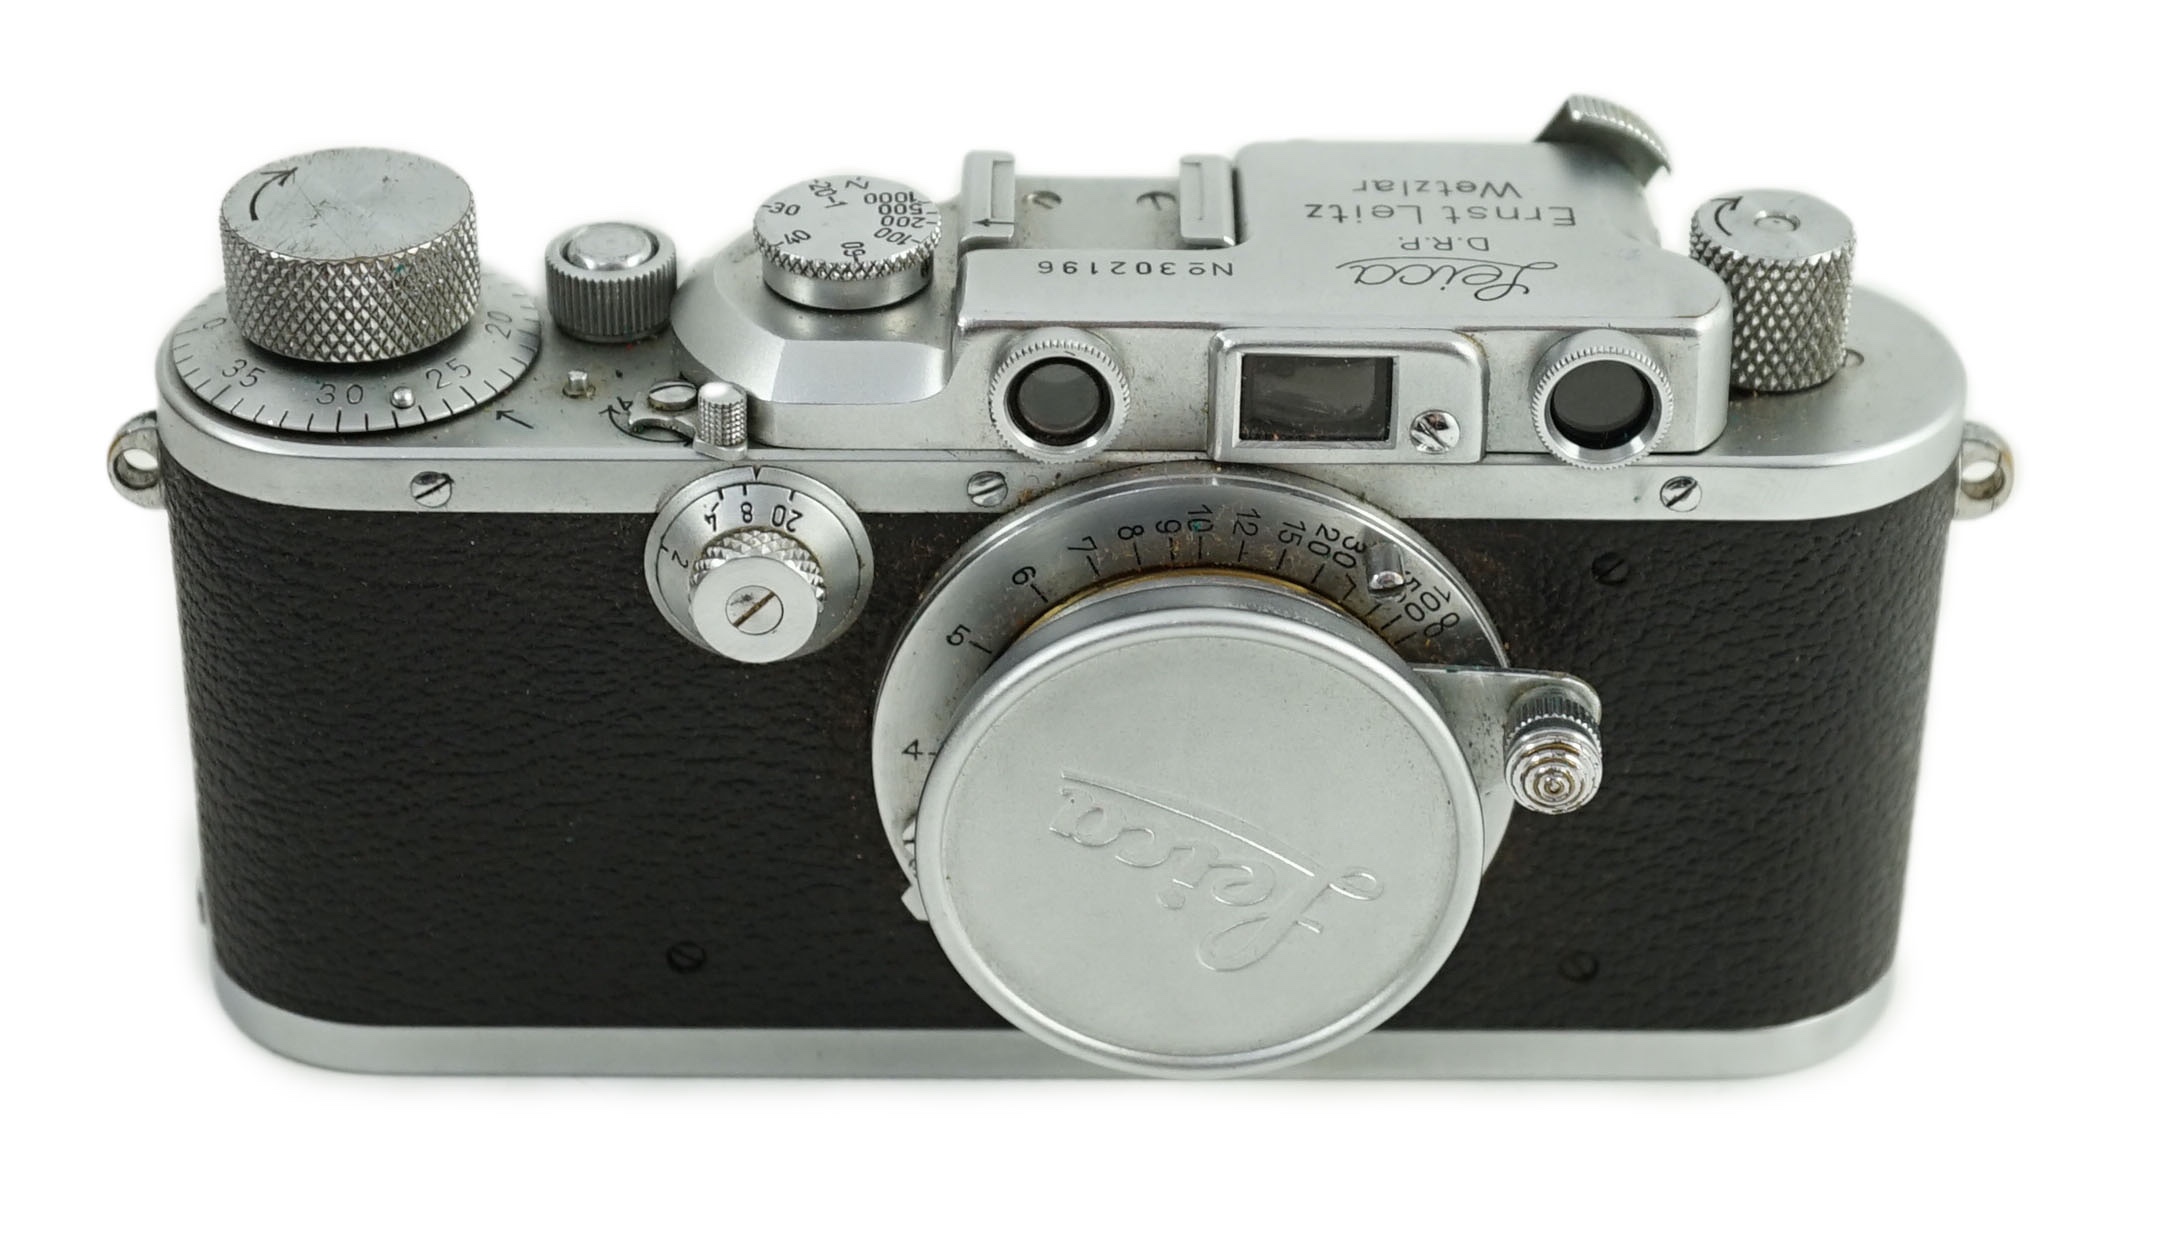 A Leica IIIa camera, number 302196 with Leitz Elmar F51:35 lens                                                                                                                                                             